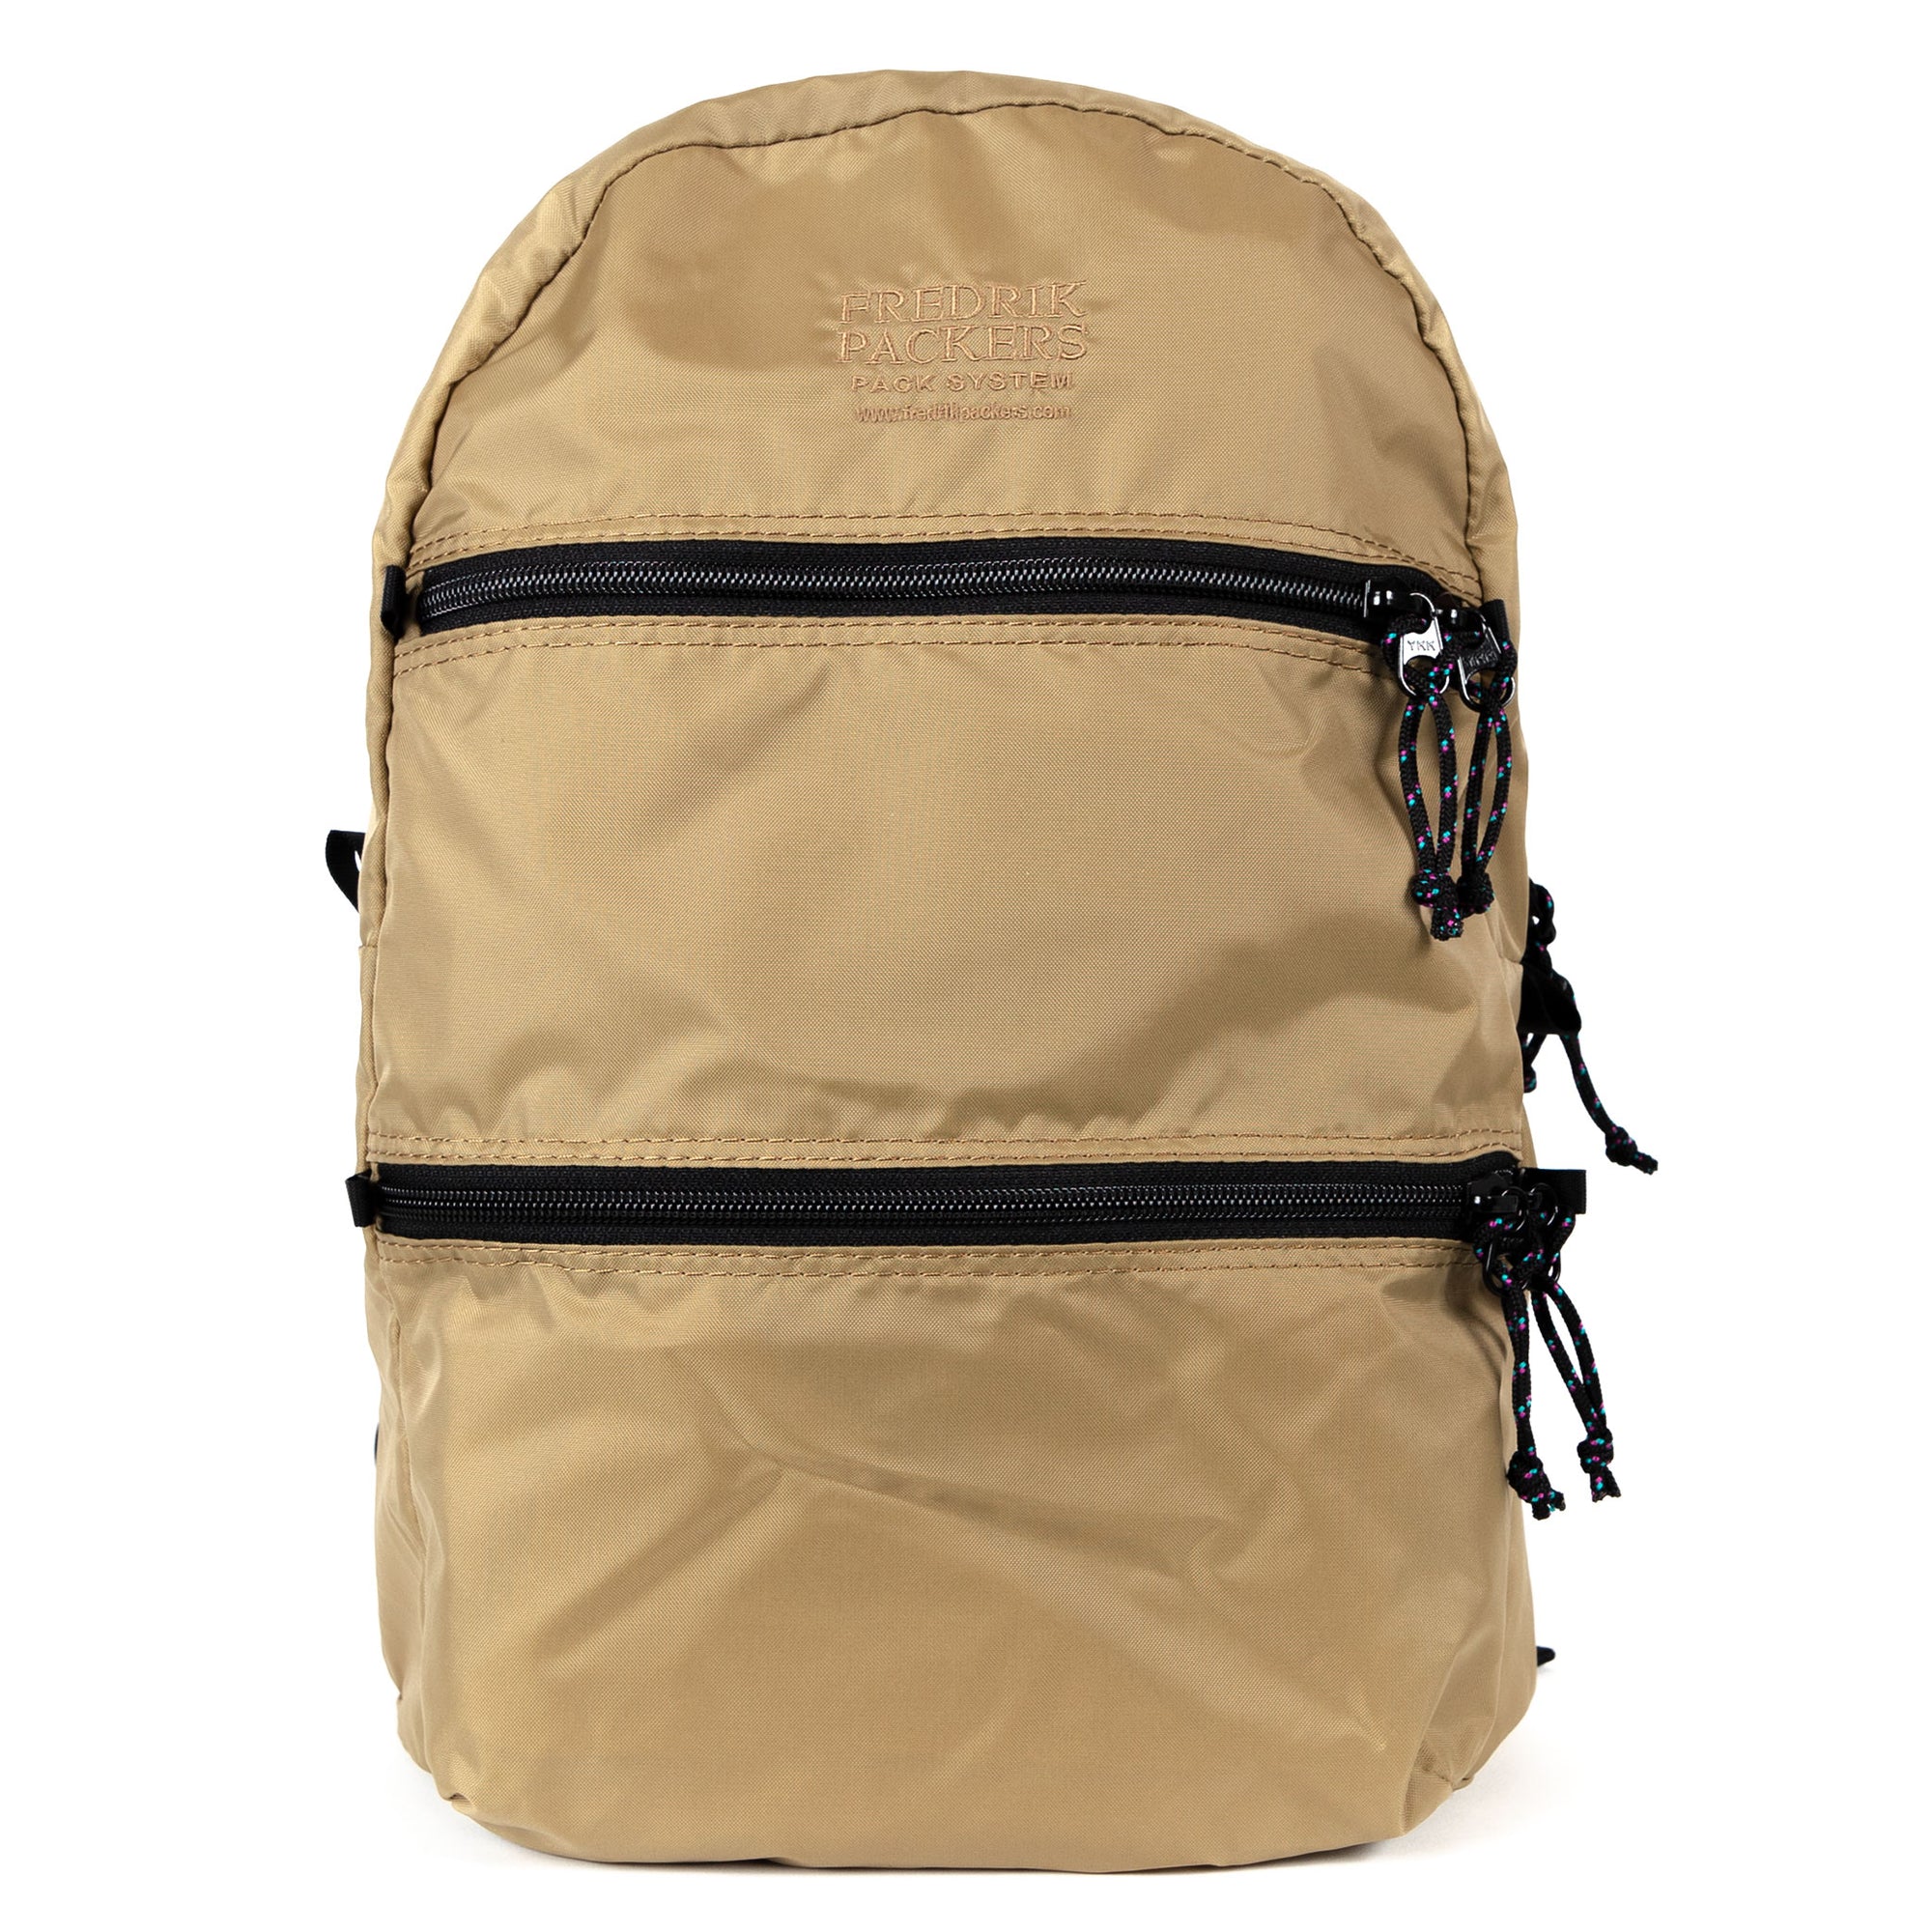 Fredrik_packers-double-zip-backpack_khaki